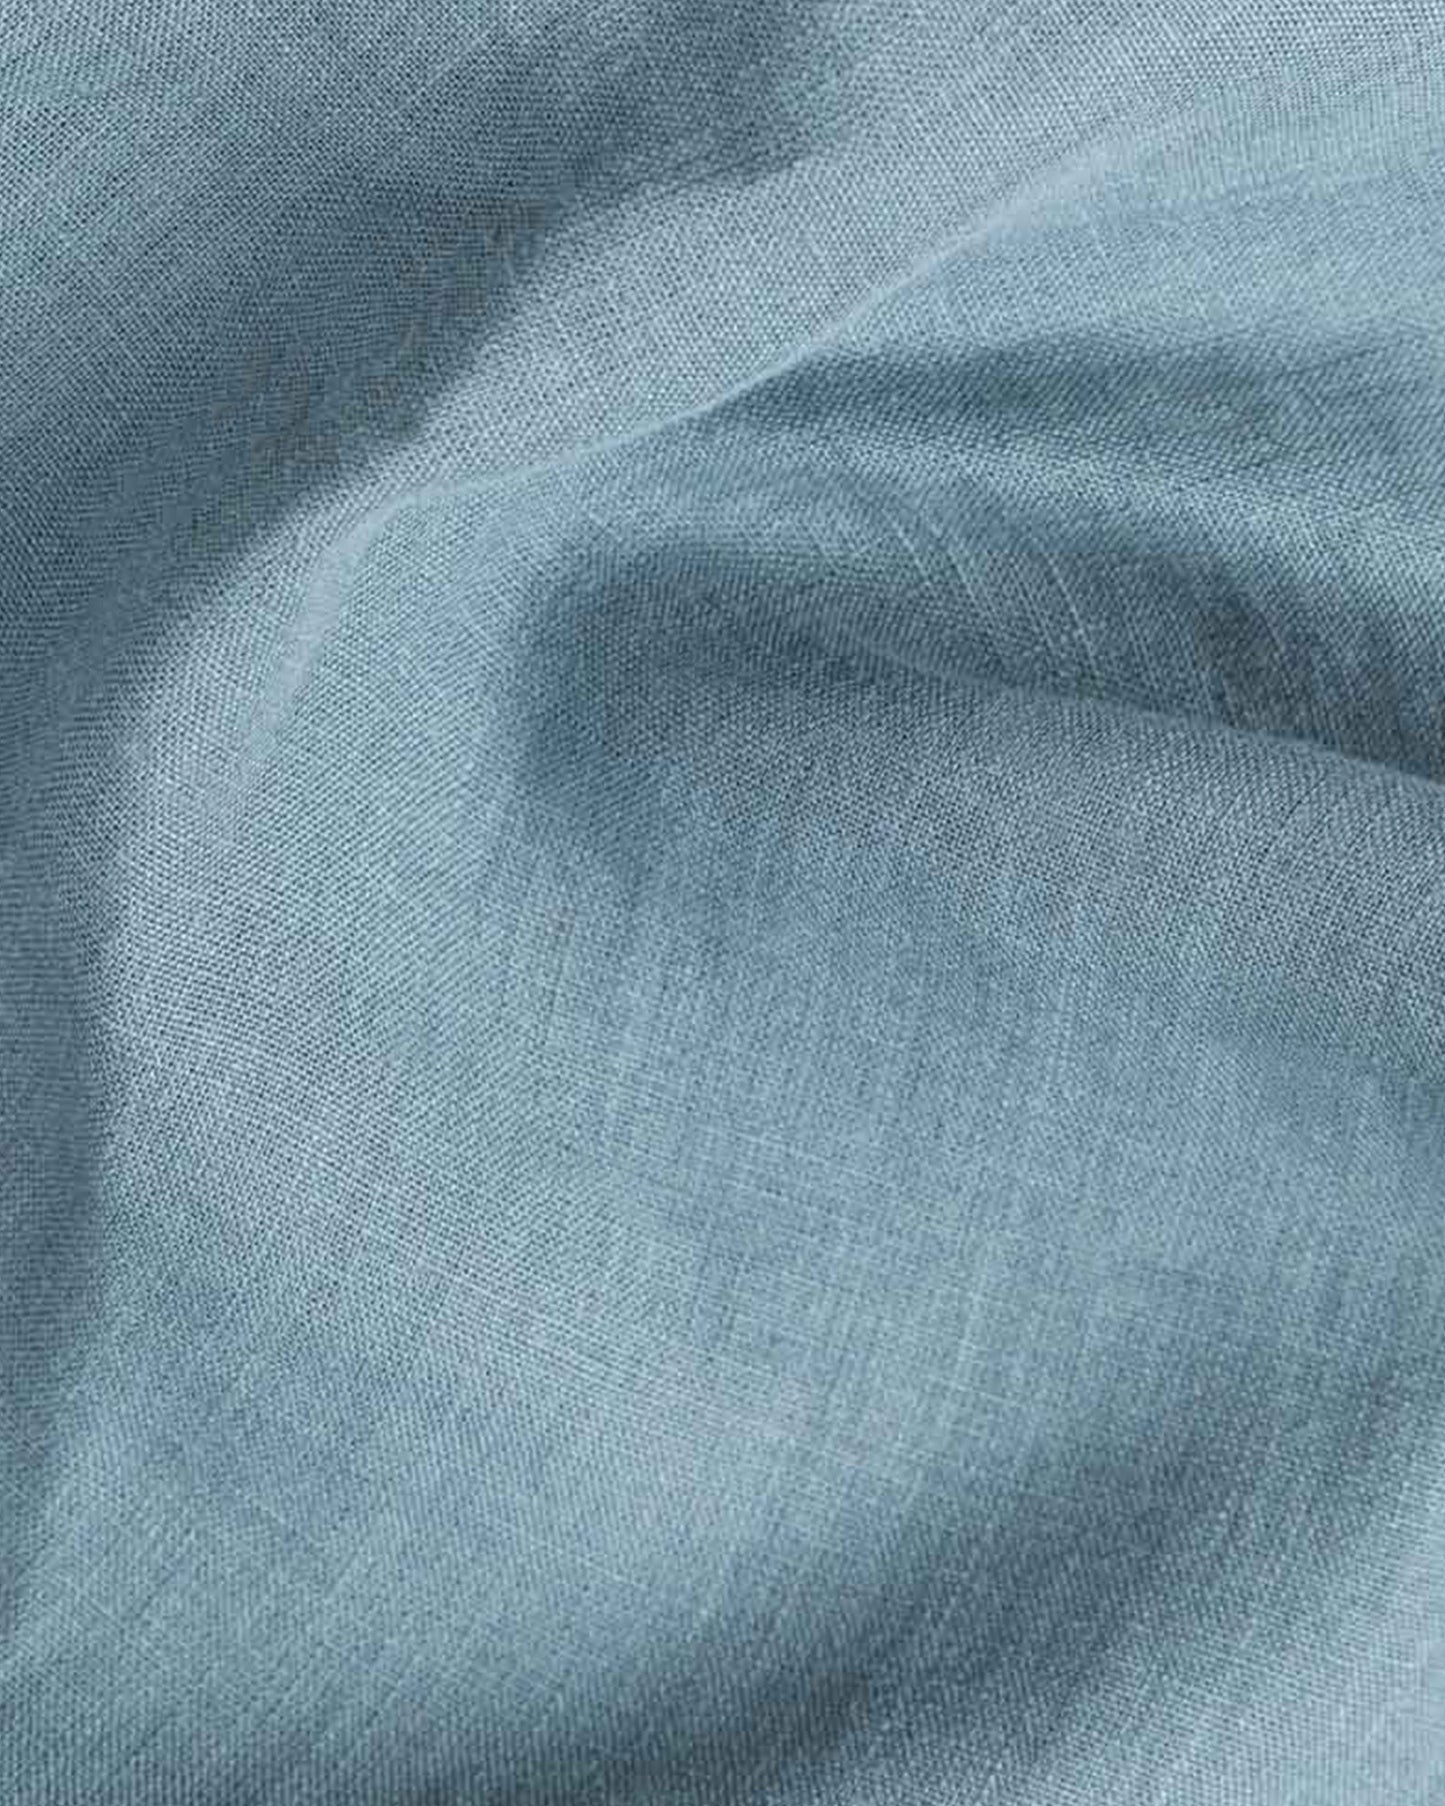 Mermaid ruffle linen pillowcase in Gray blue - MagicLinen